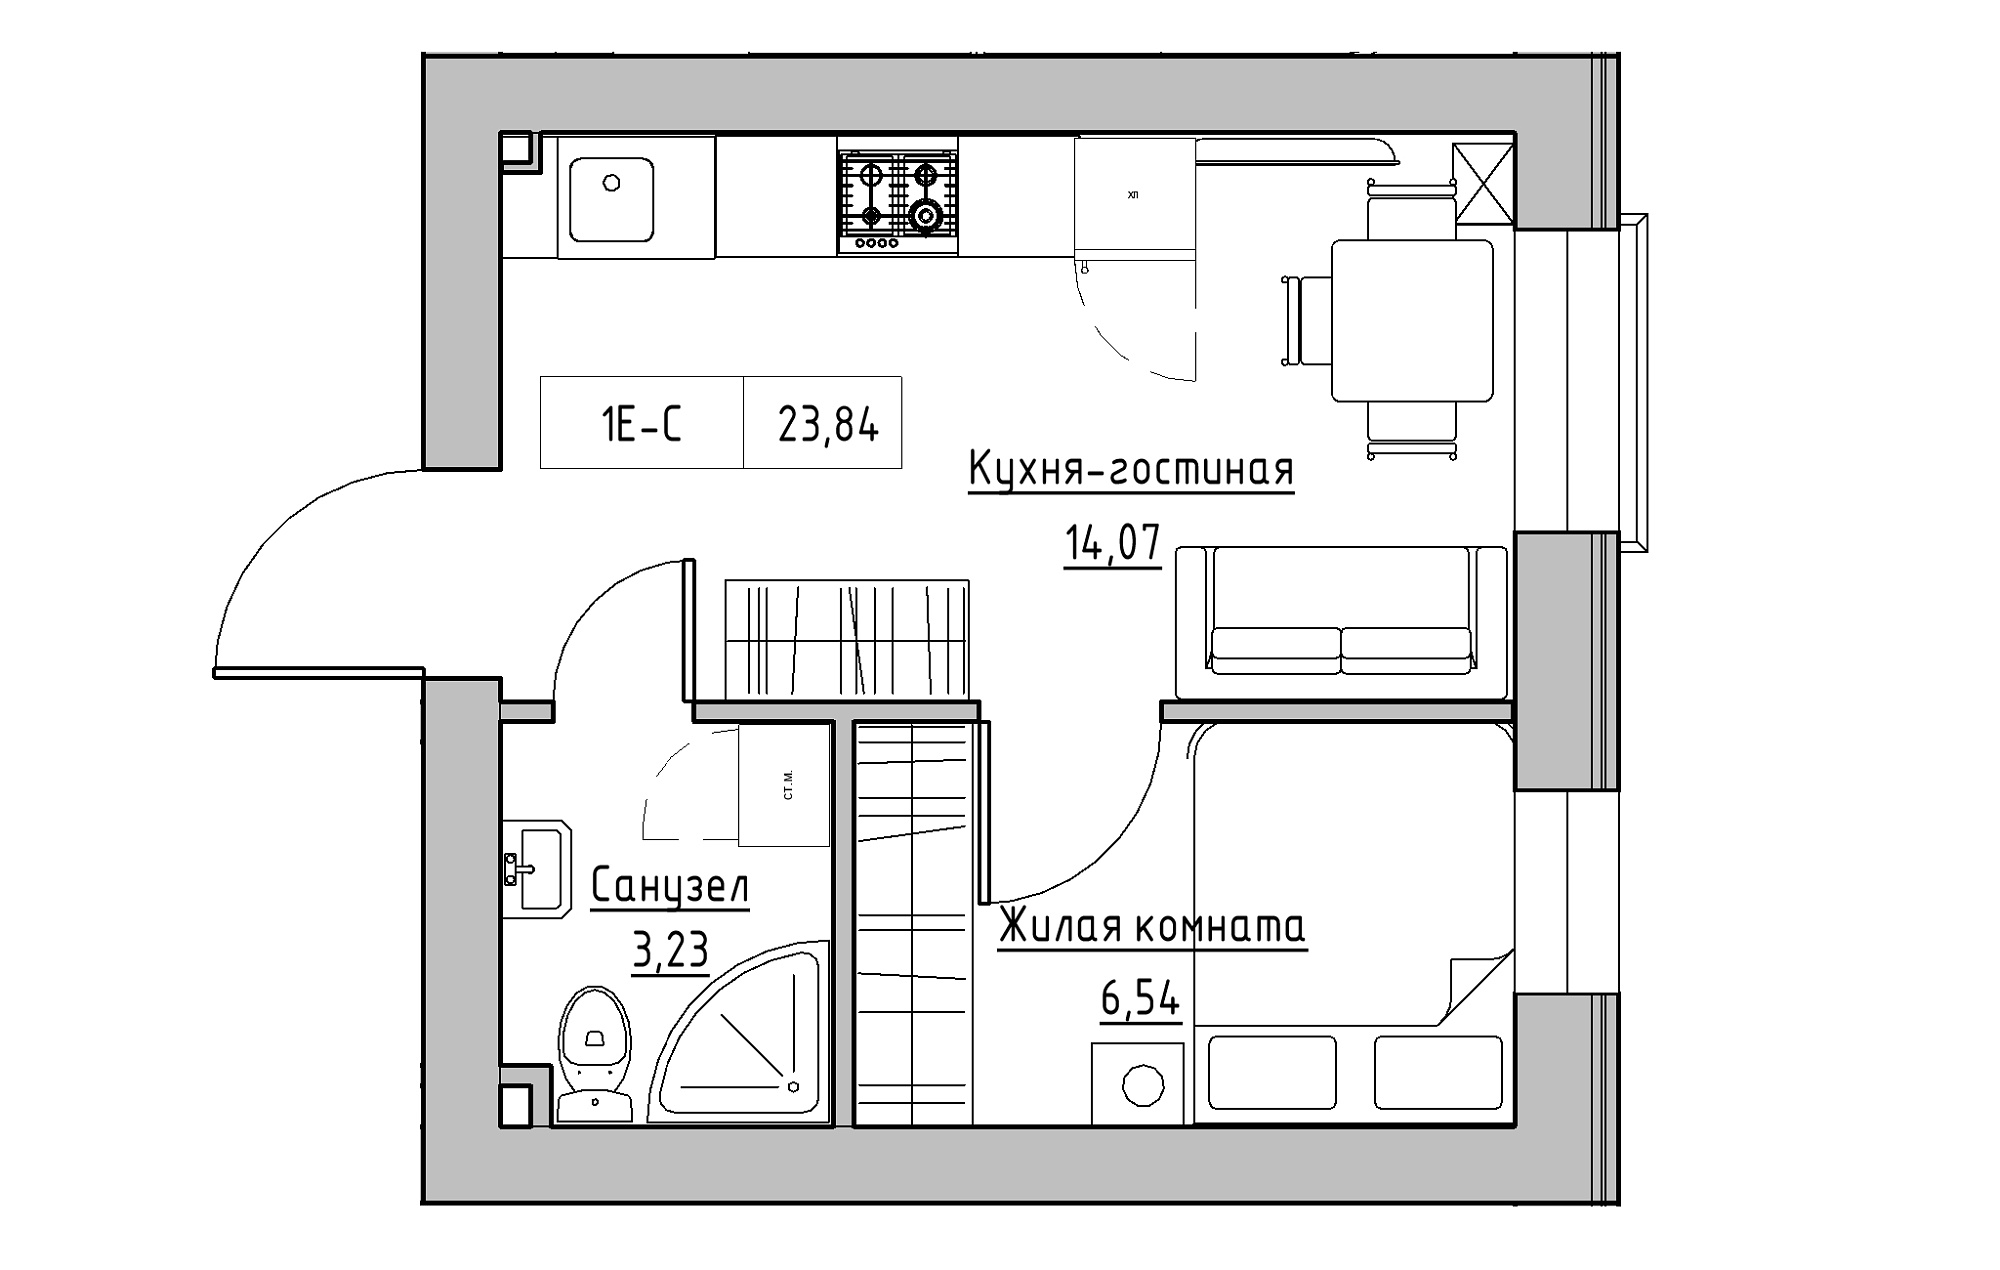 Planning 1-rm flats area 23.84m2, KS-018-02/0011.